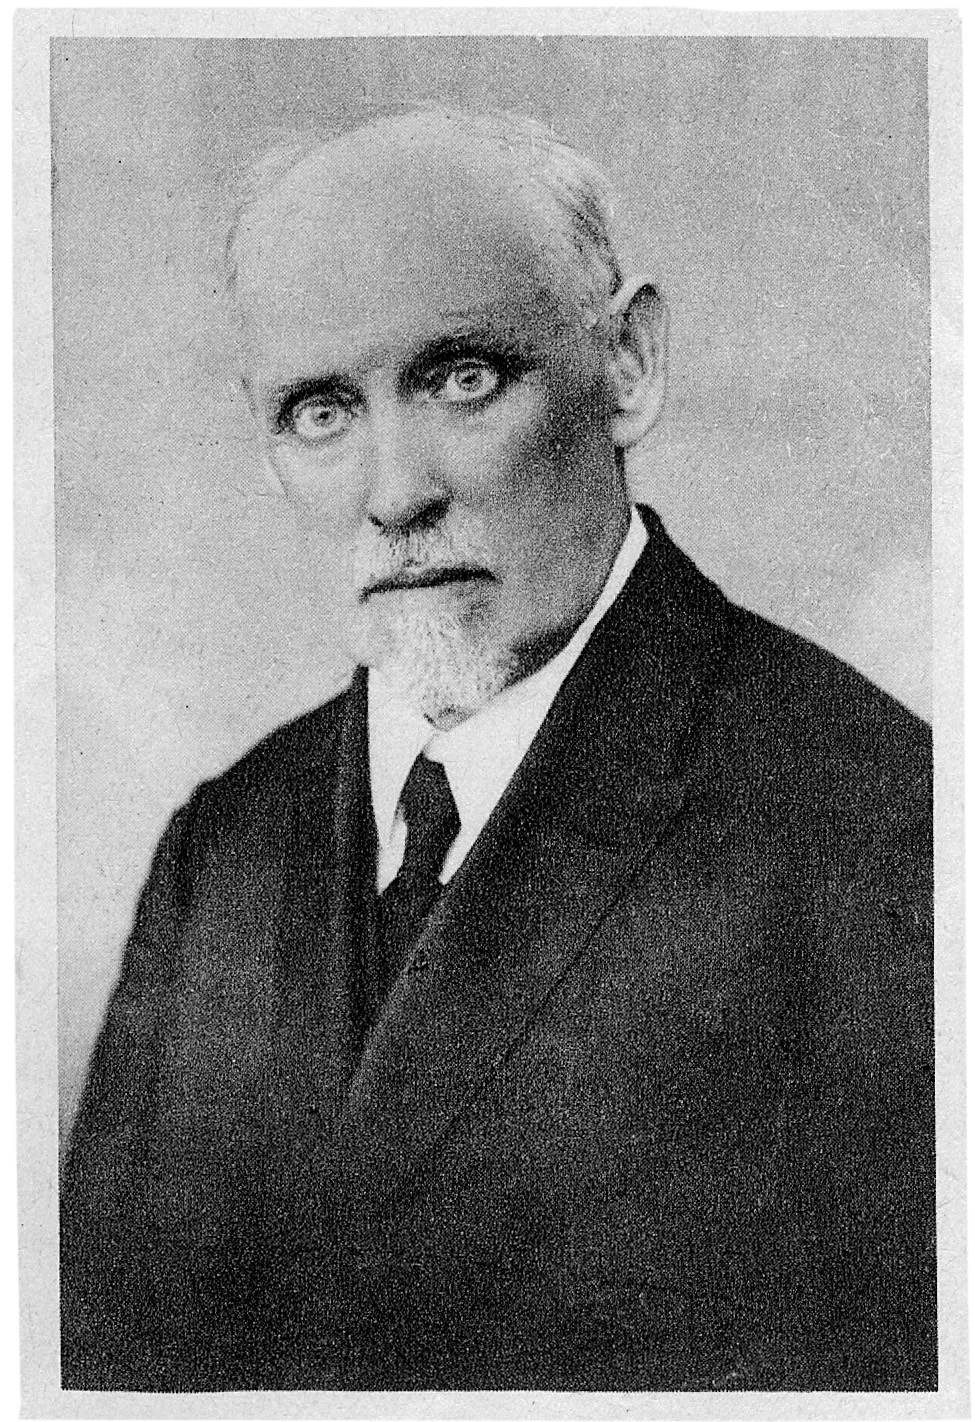 Anton Chráska, Ljubljana, 1920